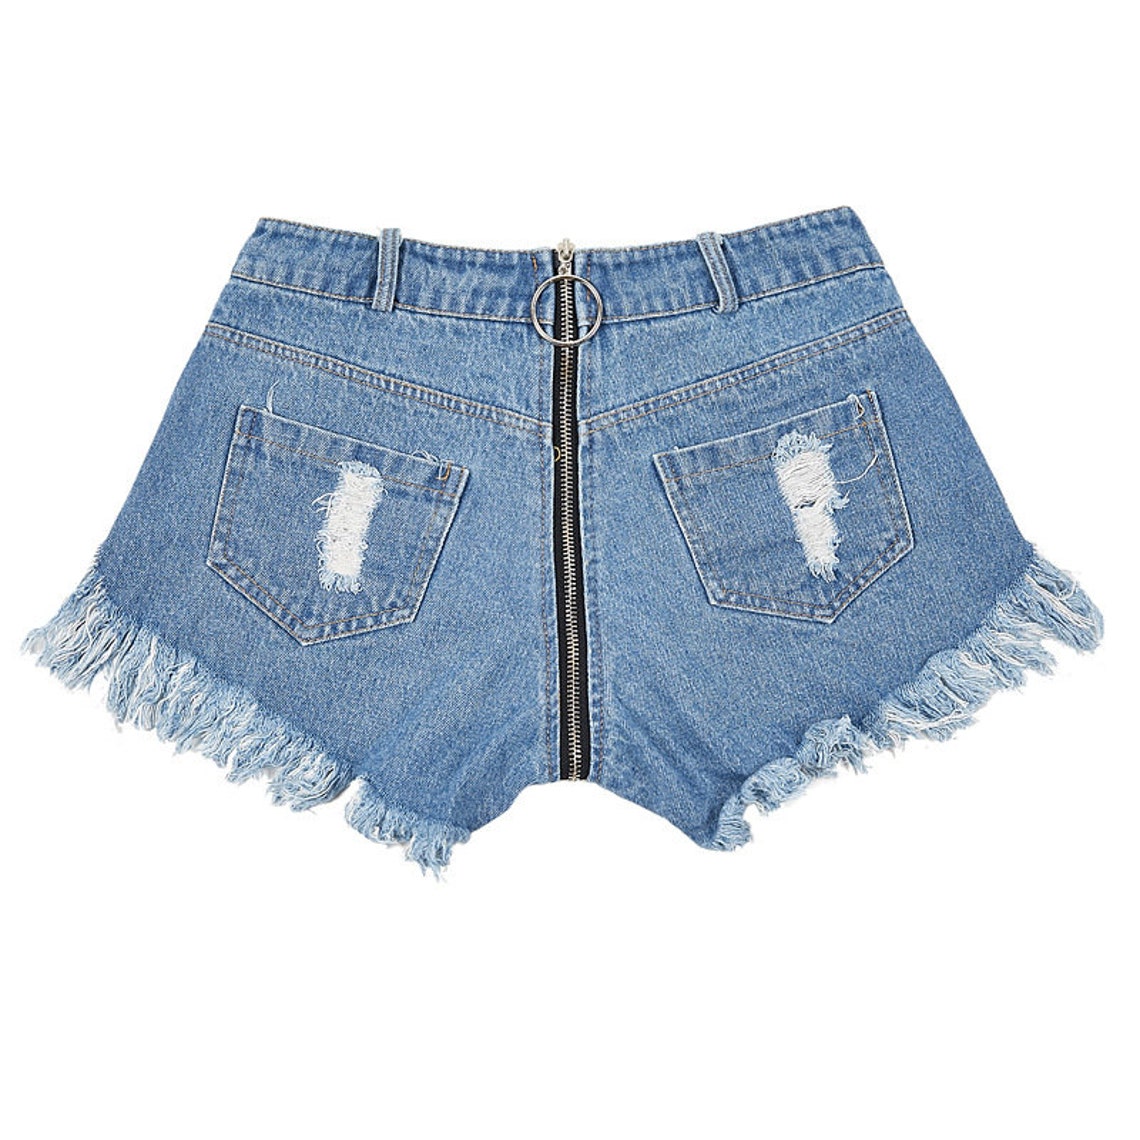 Cowgirl Shorts Hot Pants Short Women'S Clothing High | Etsy